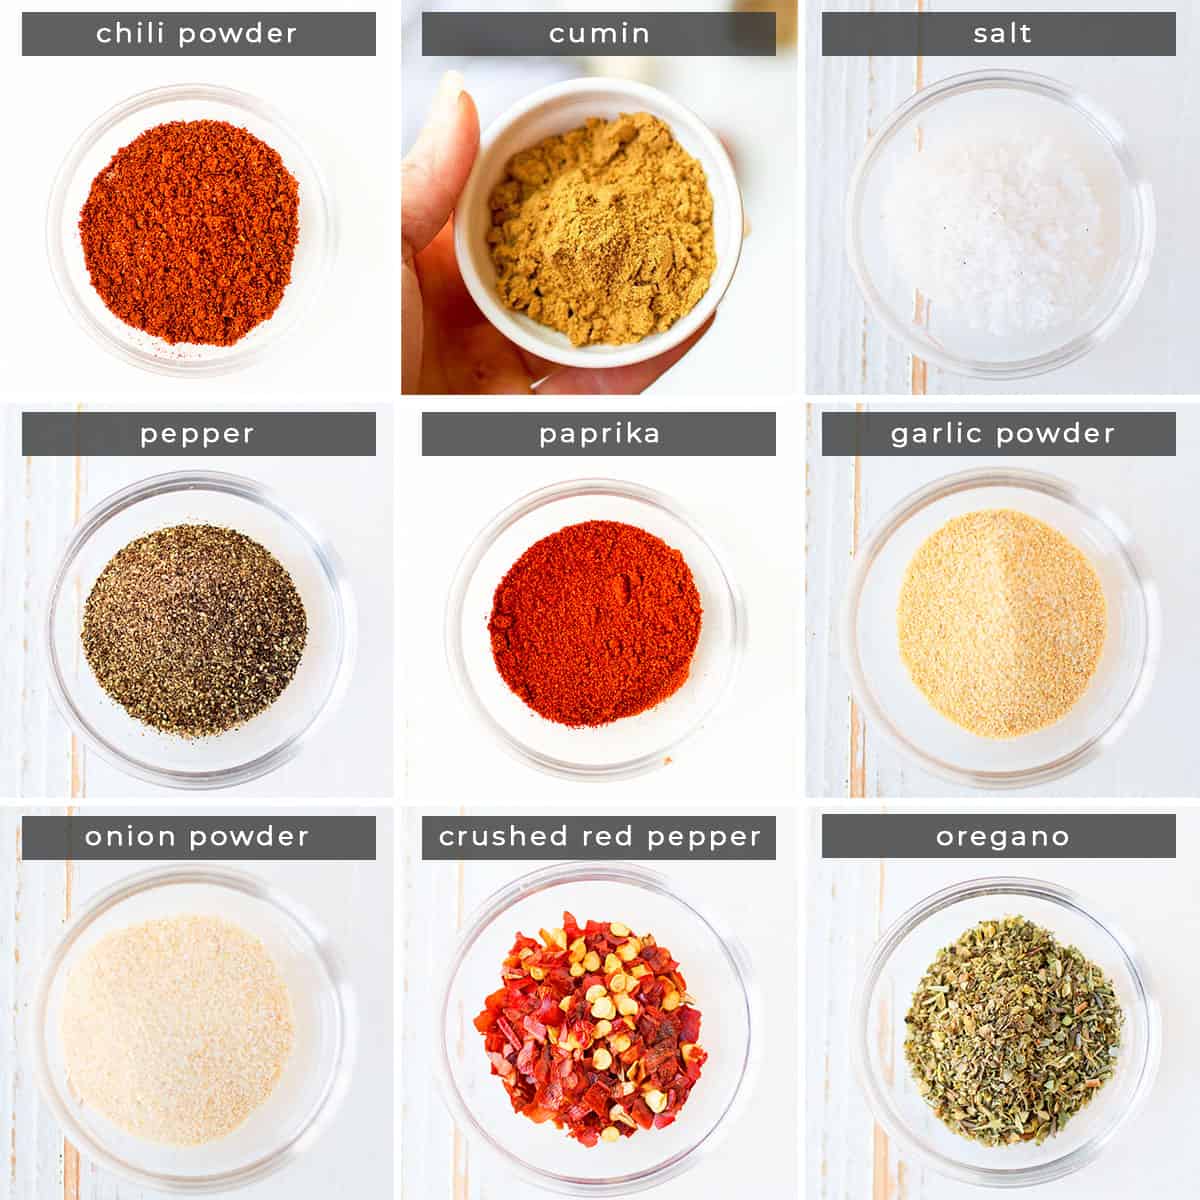 Image containing recipe ingredients chili powder, cumin, salt, pepper, paprika, garlic powder, onion powder, crushed red pepper, and oregano.